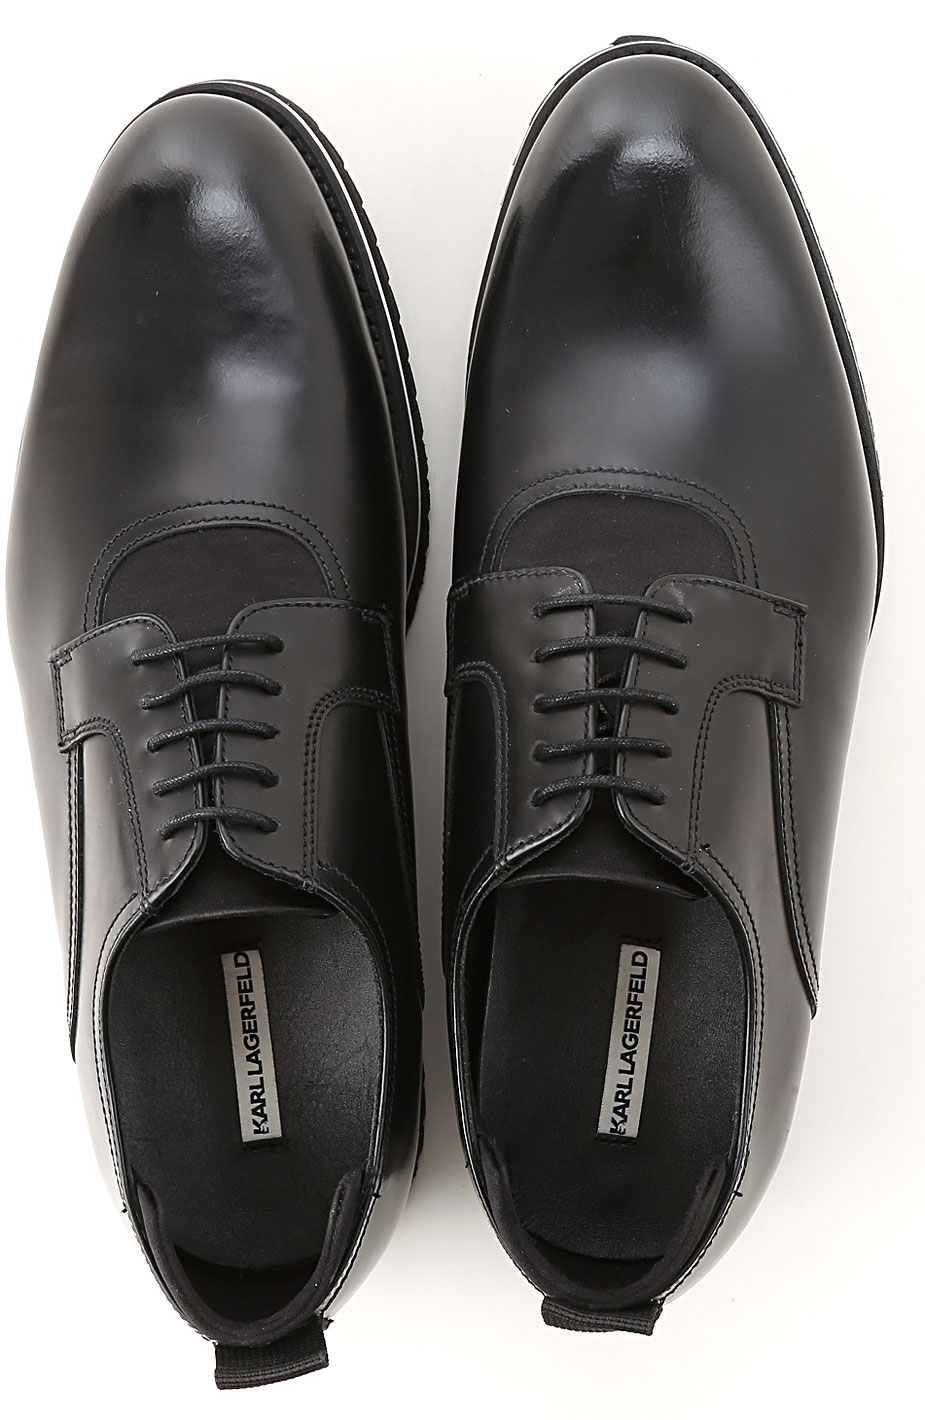 Mens Shoes Karl Lagerfeld, Style code: kl13520-400-nettuno